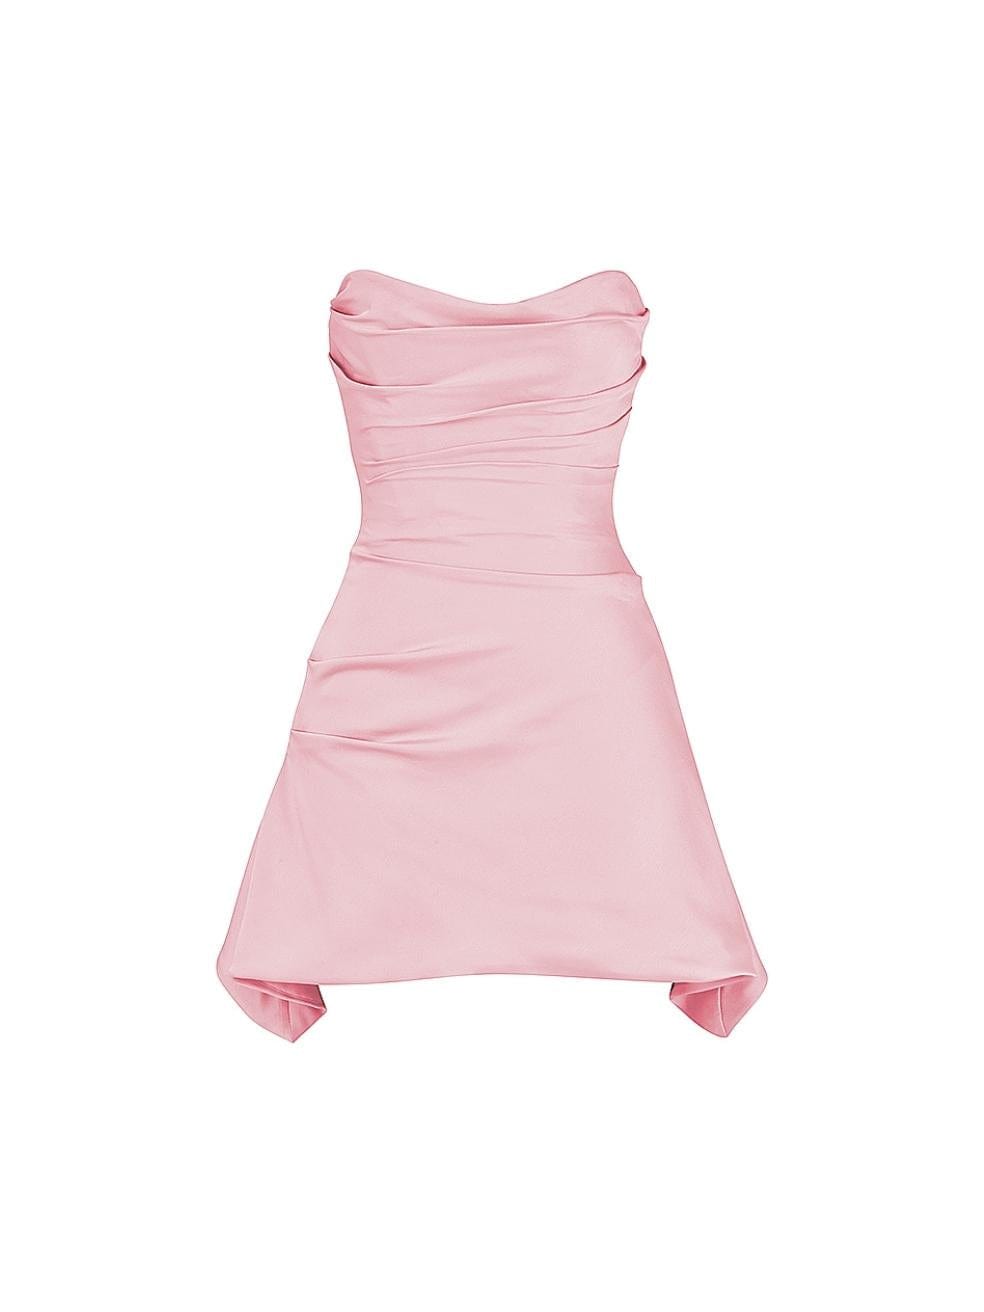 Jasmine Rose Pink Draped Strapless Corset dress